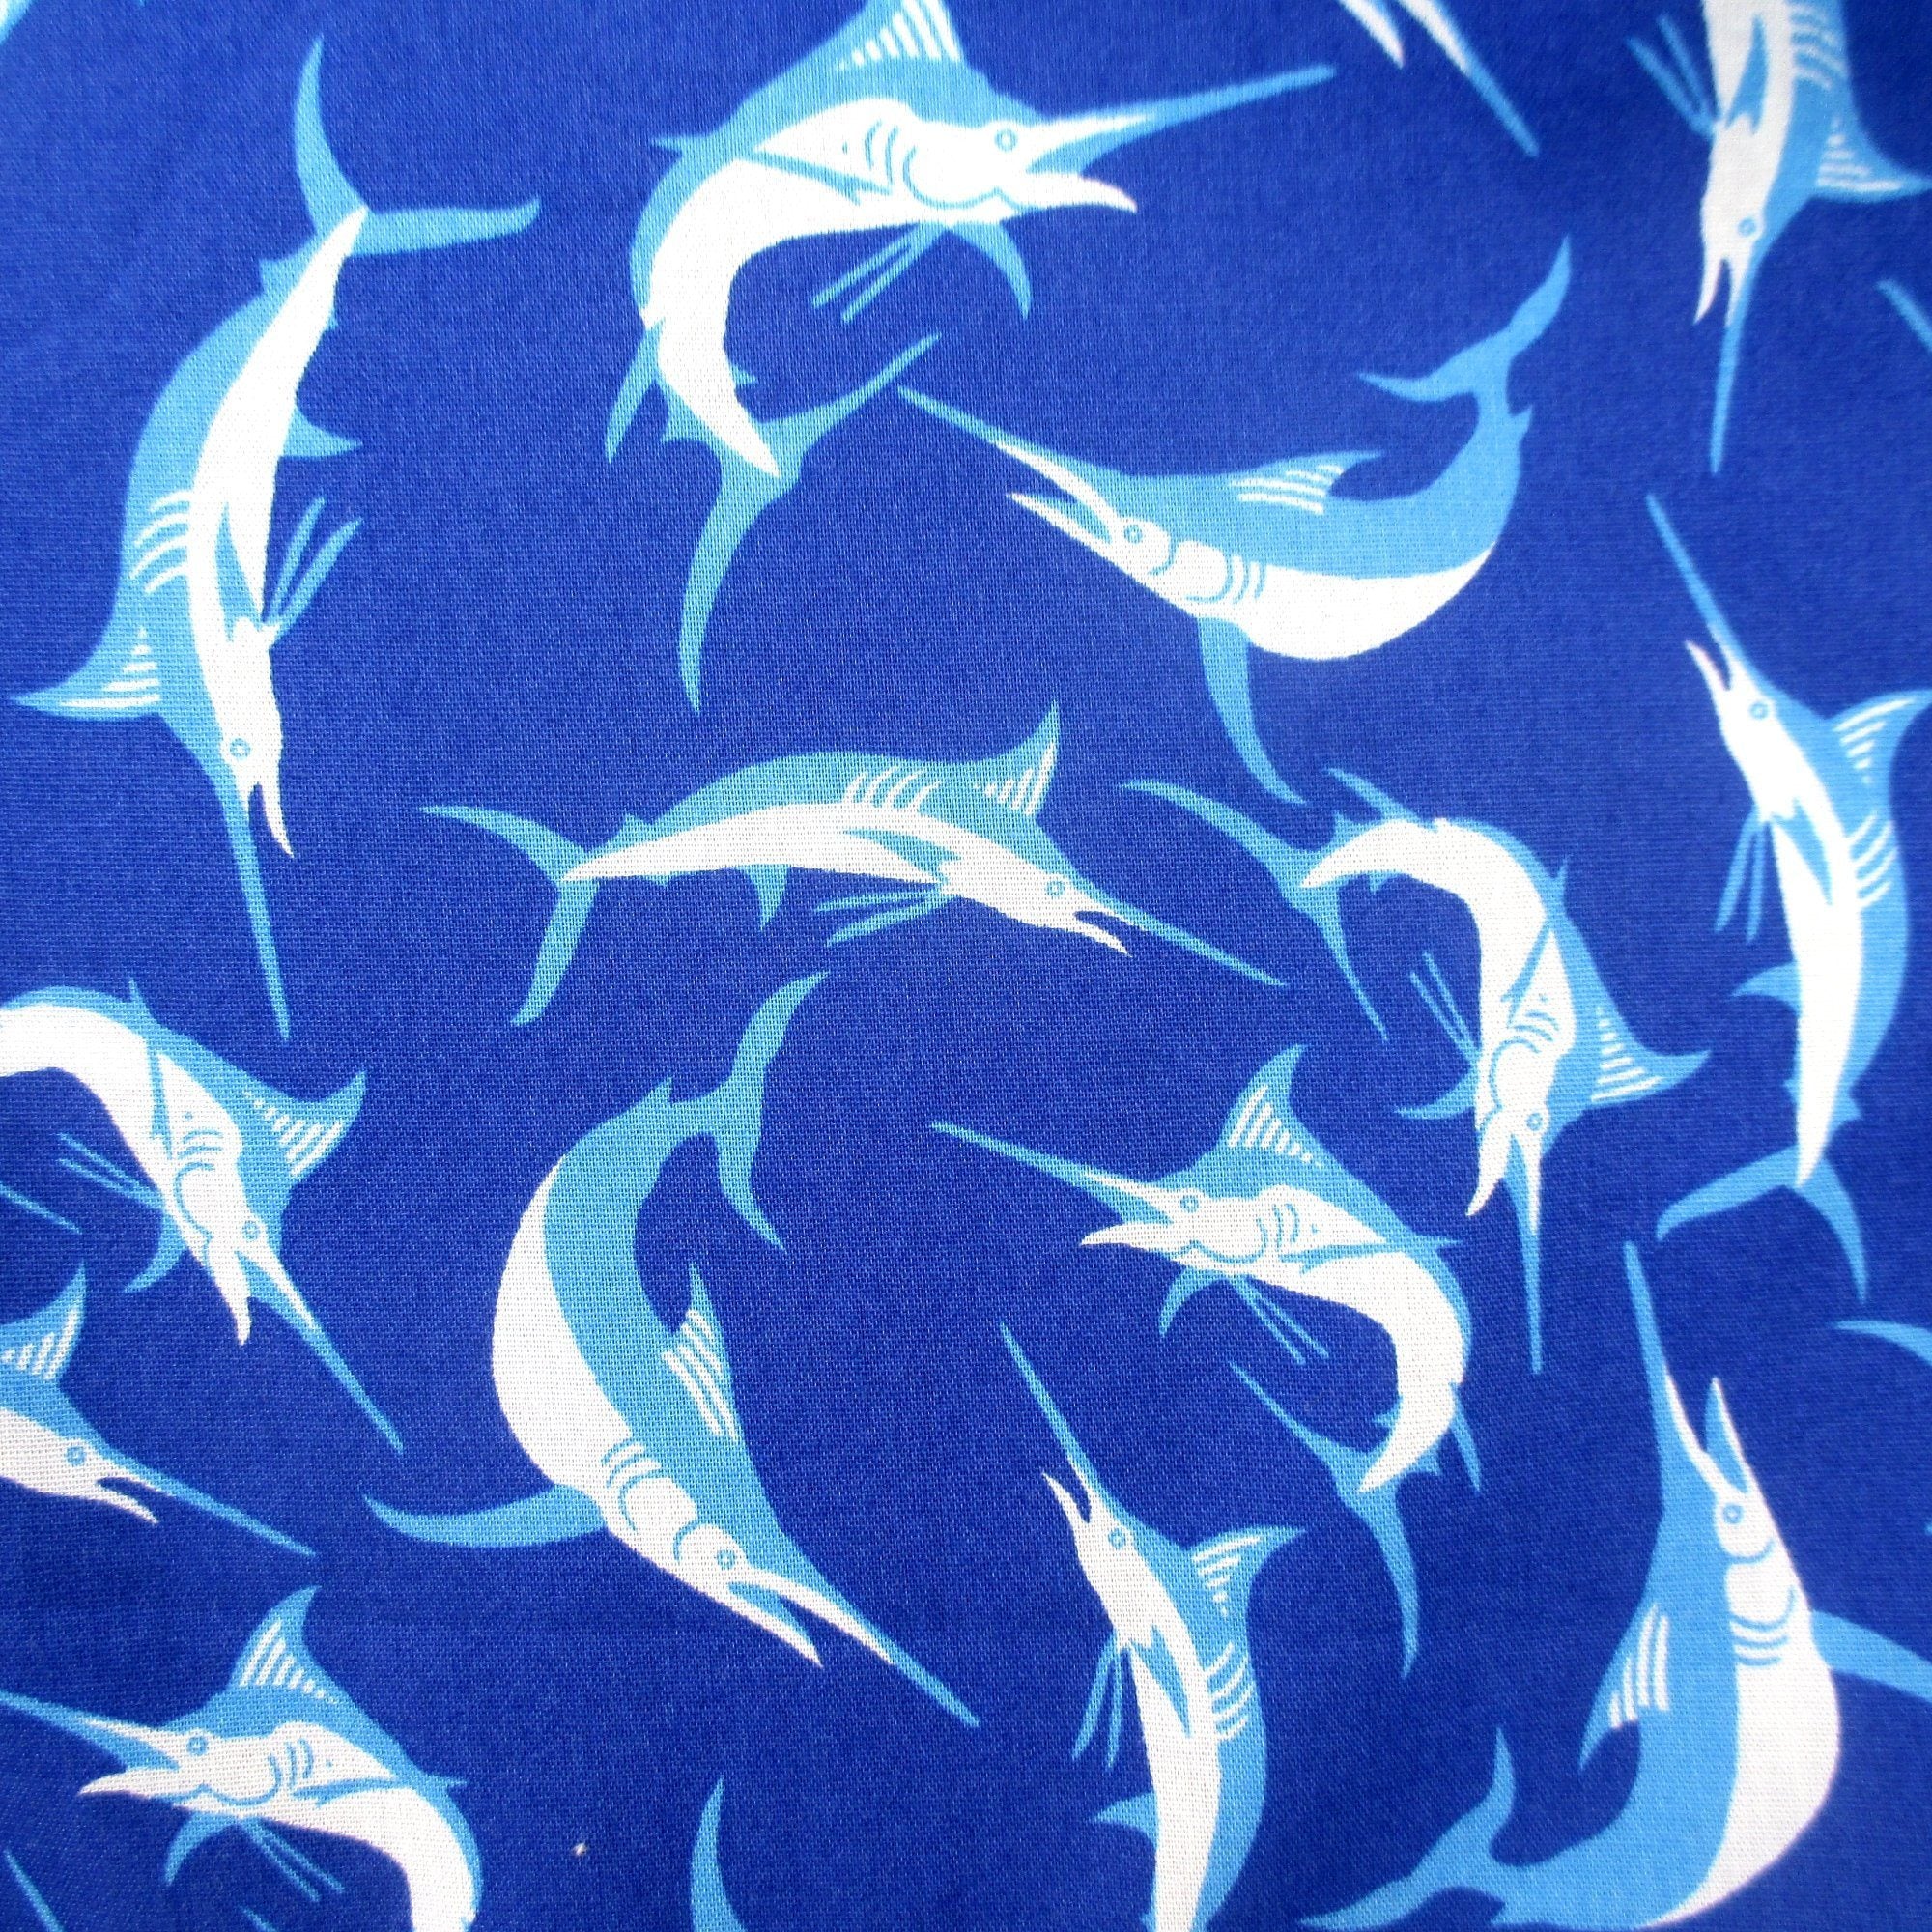 Marlin Swordfish Print Bright Blue Cotton Boxer Shorts Gifts for Fishermen Manly Men